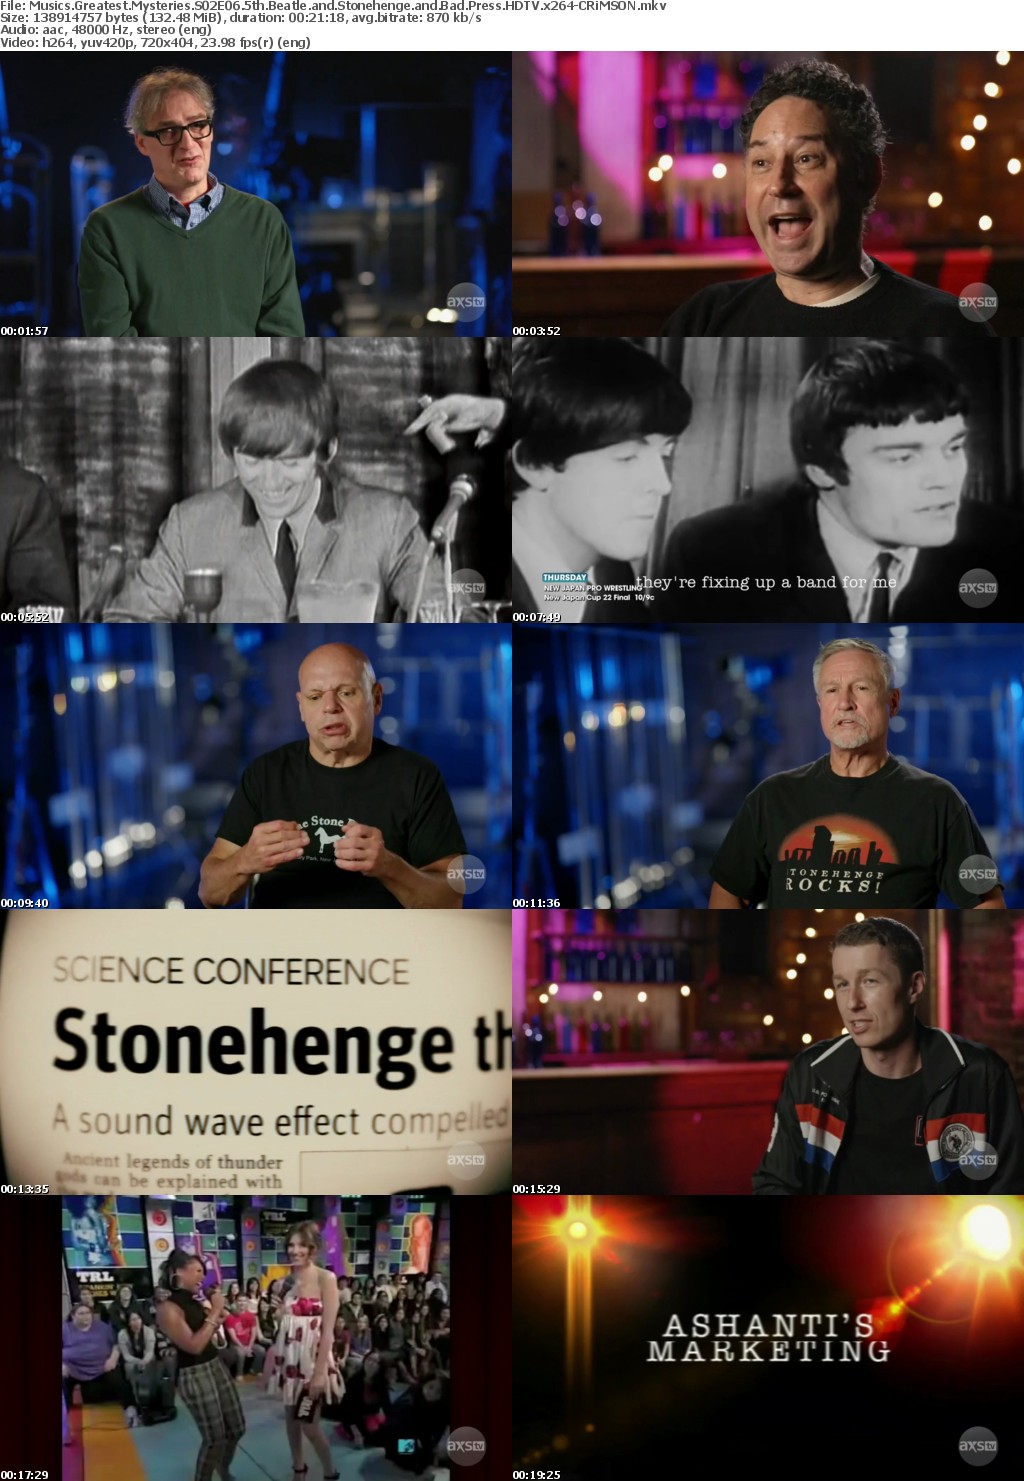 Musics Greatest Mysteries S02E06 5th Beatle and Stonehenge and Bad Press HDTV x264-CRiMSON